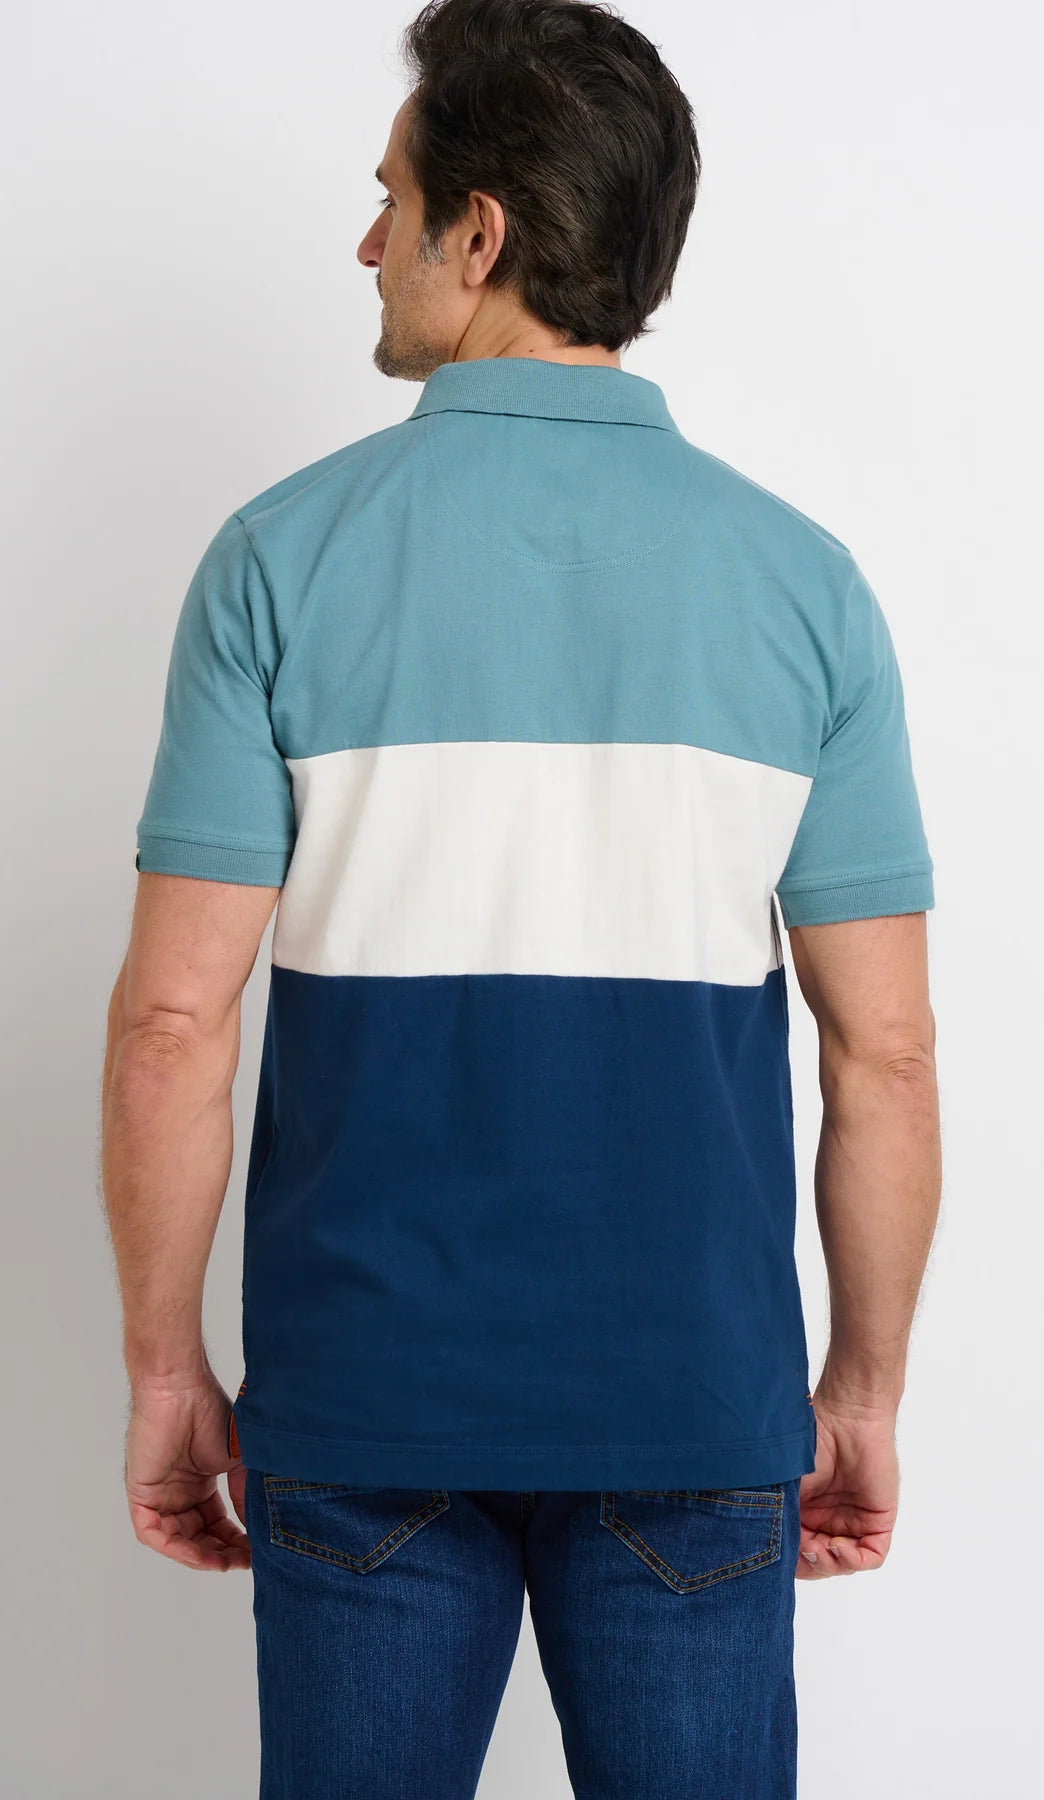 Short sleeve colour block style polo shirt for men from Brakeburn in blue.